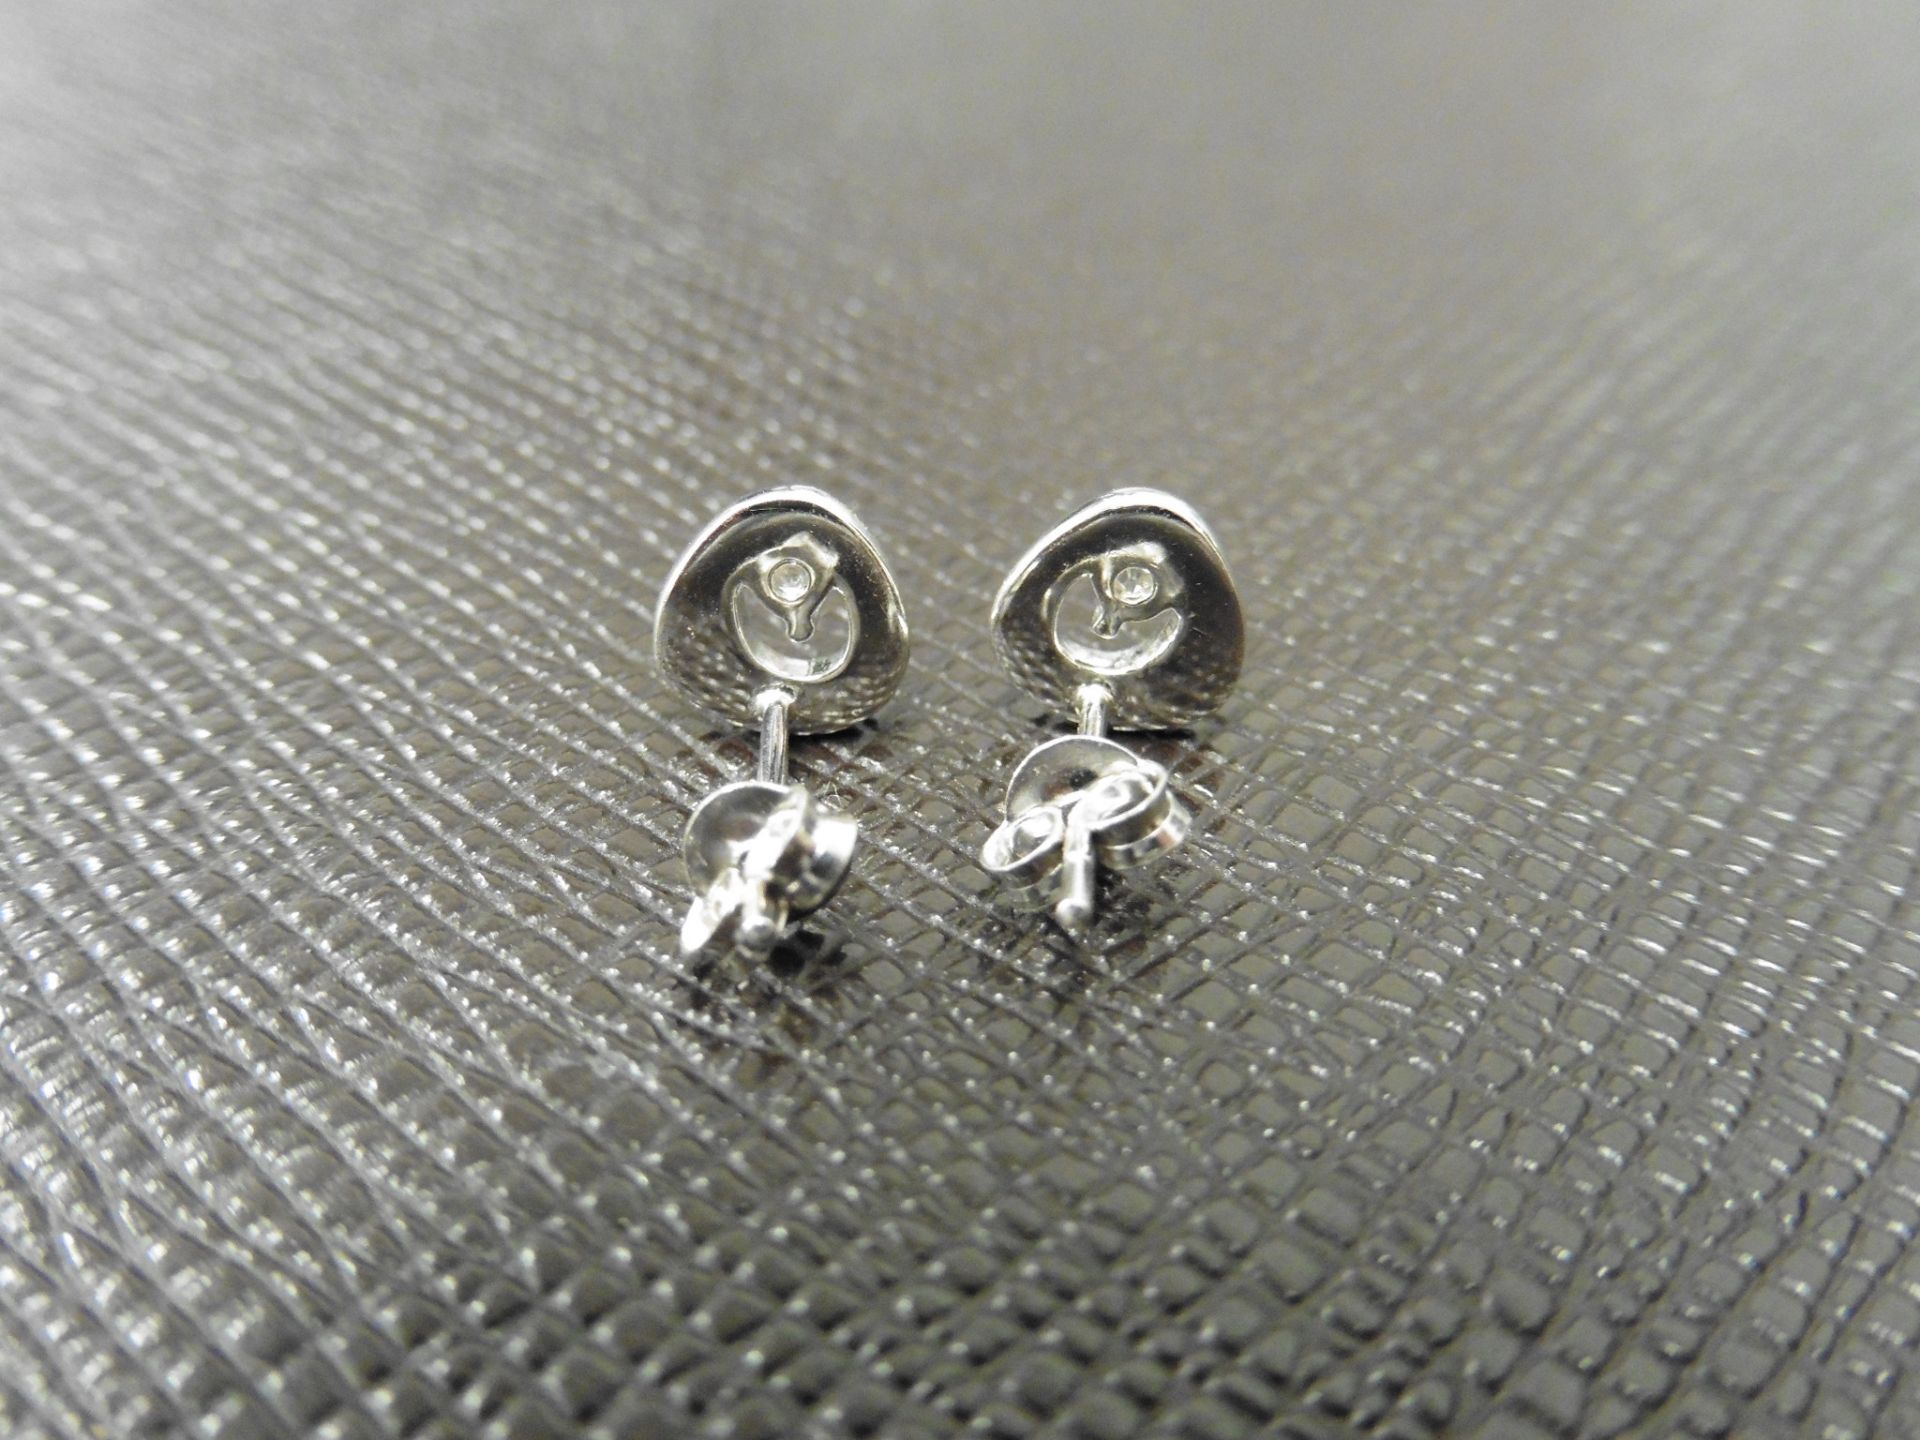 0.12ct diamond earrings set in platinum 950. 2 small brilliant cut diamonds, H/I colourand si2 - Image 3 of 3